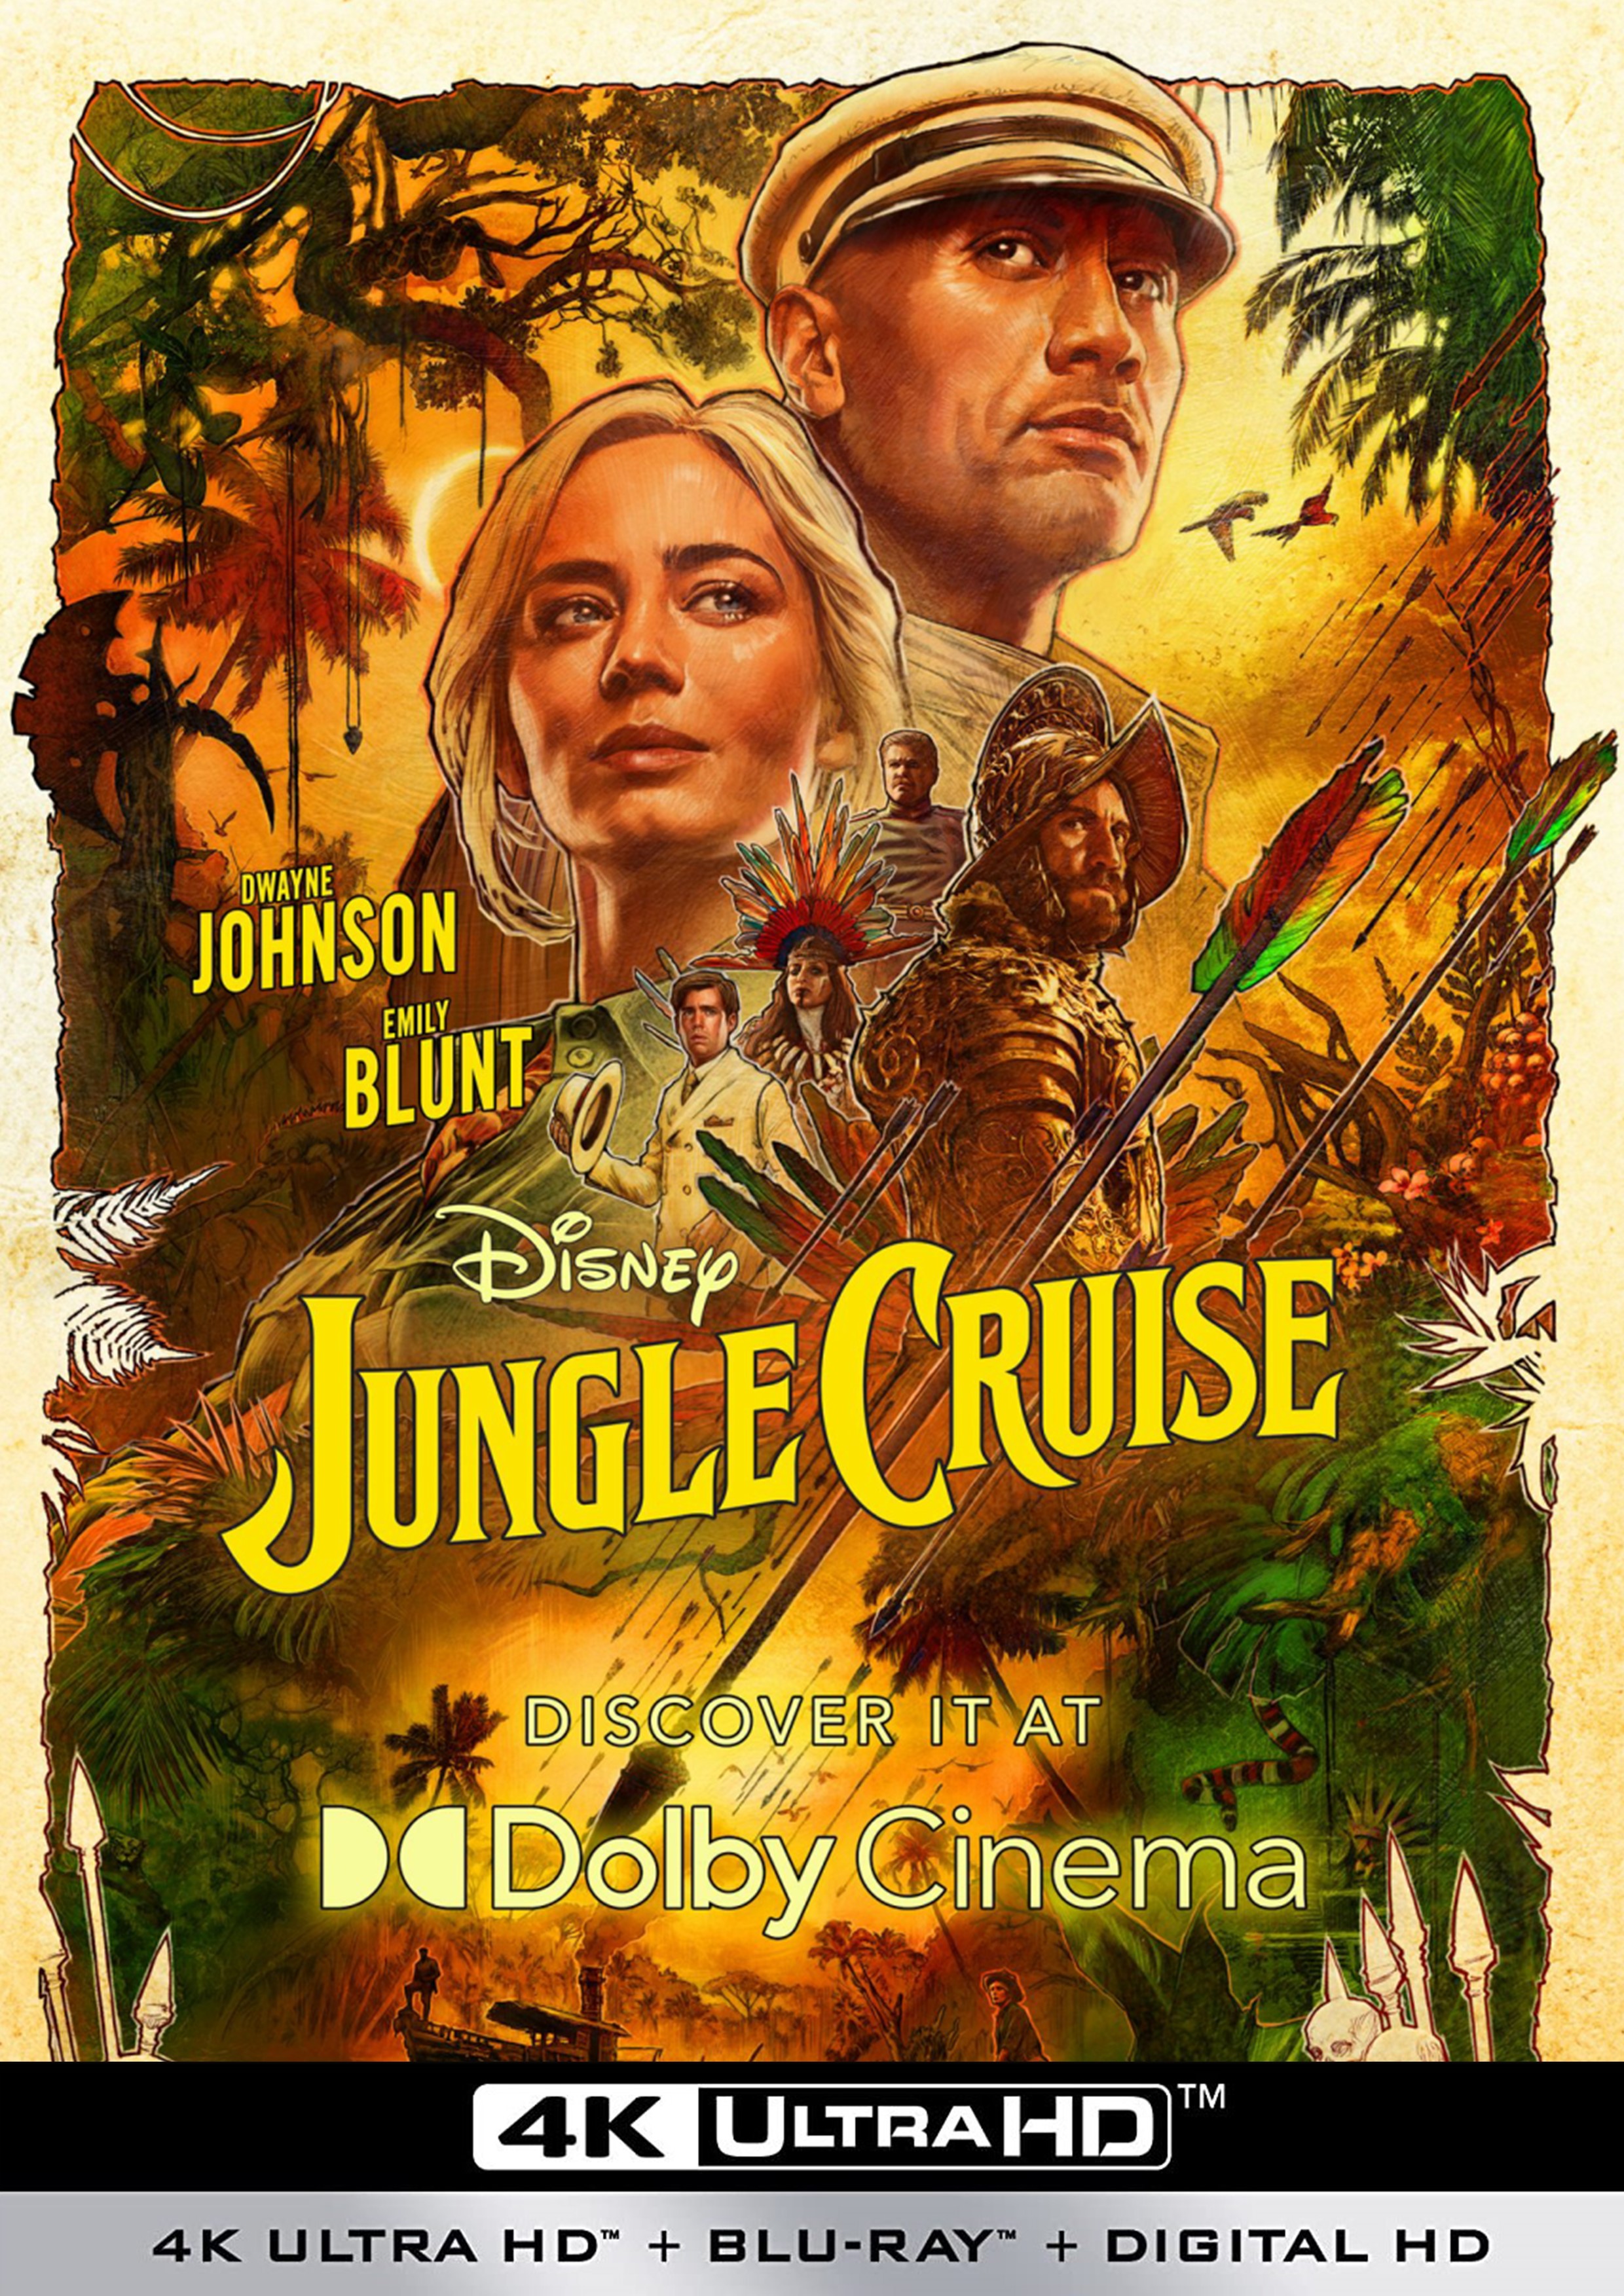 Stiahni si UHD Filmy Expedice: Dzungle / Jungle Cruise (2021)(CZ/EN)(2160p 4K BRRemux) = CSFD 63%